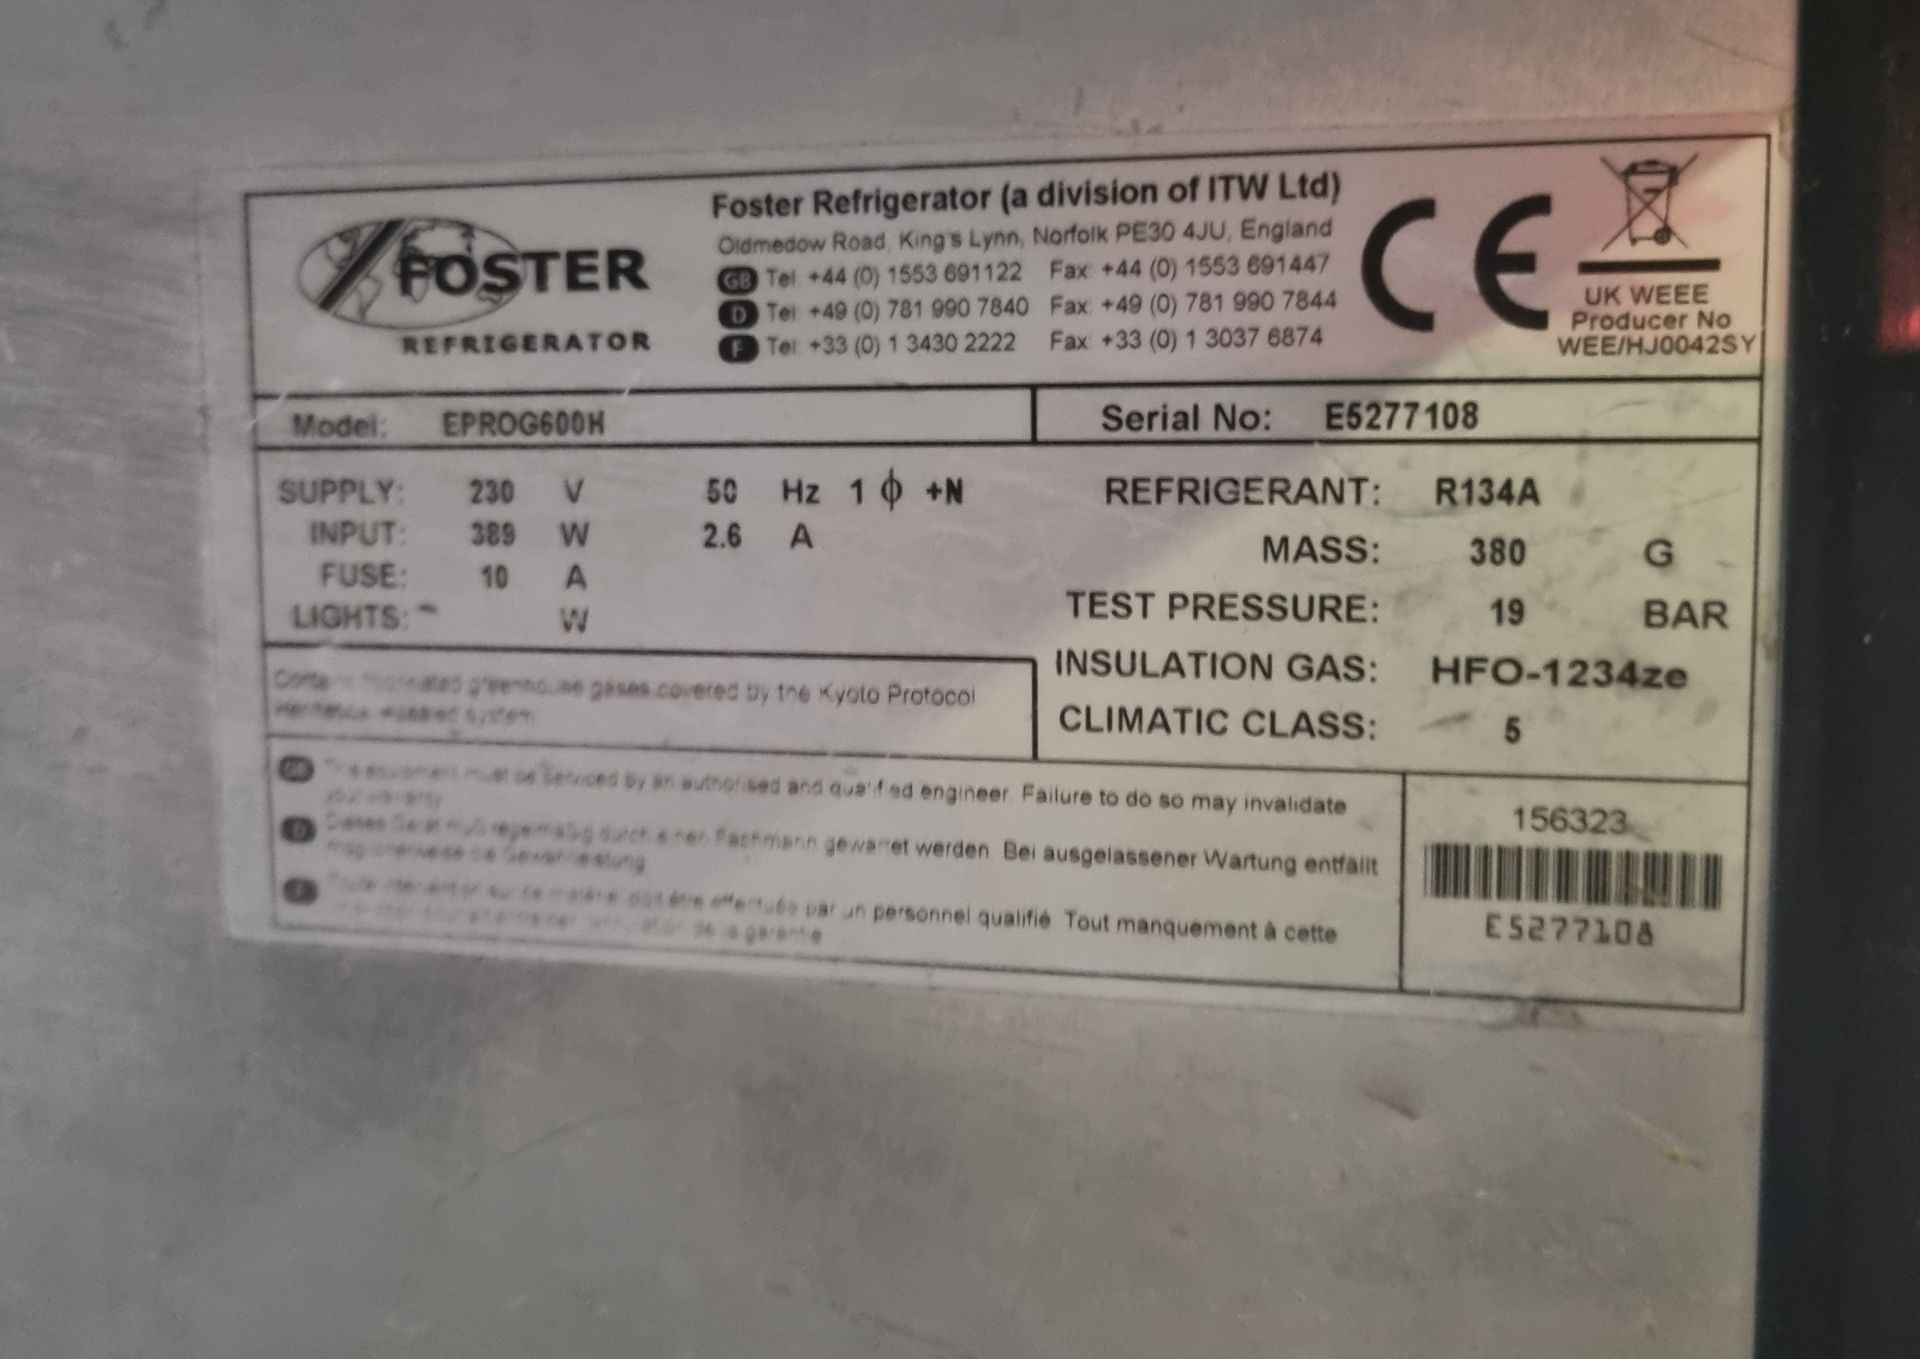 Foster EPROG600H stainless steel single door upright fridge - W 700 x D 820 x H 2050mm - Image 4 of 4